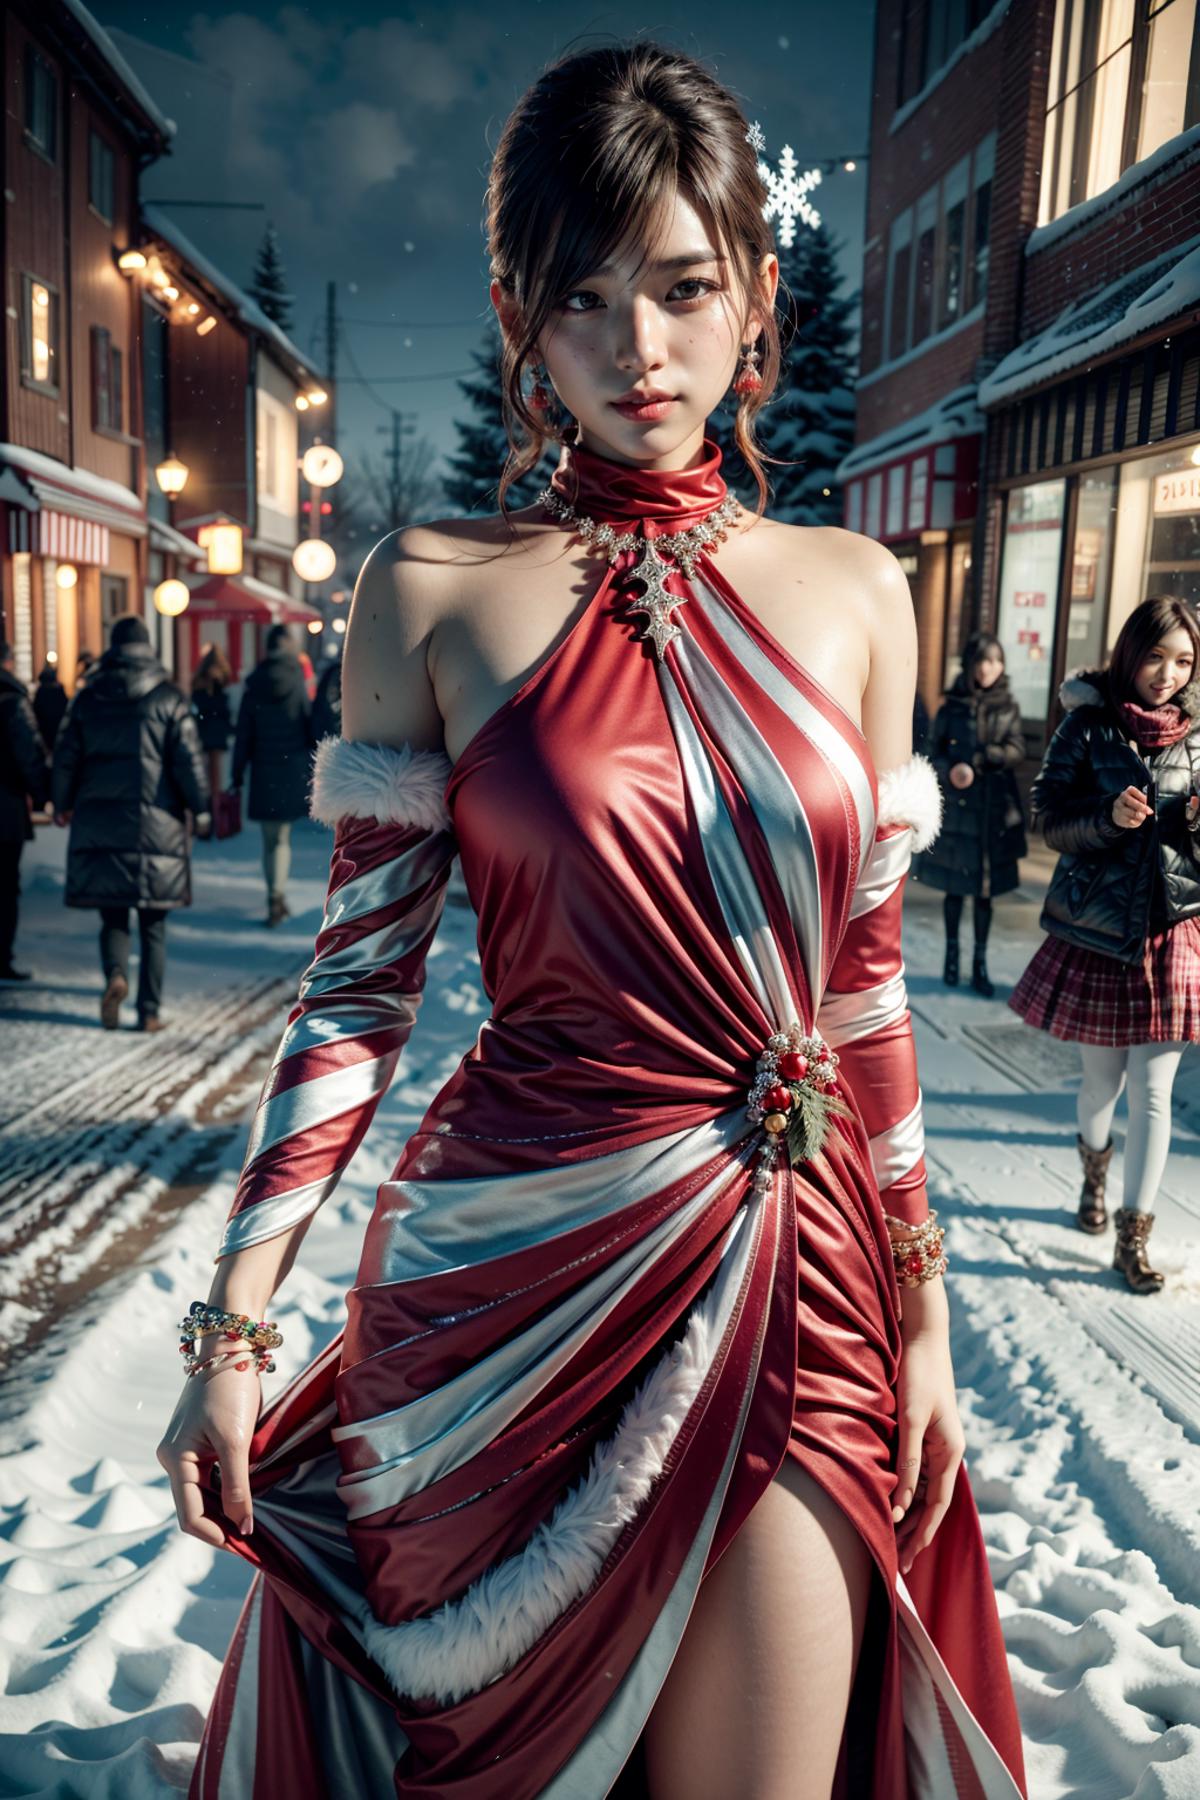 A woman in a red dress walks through a snowy city street.